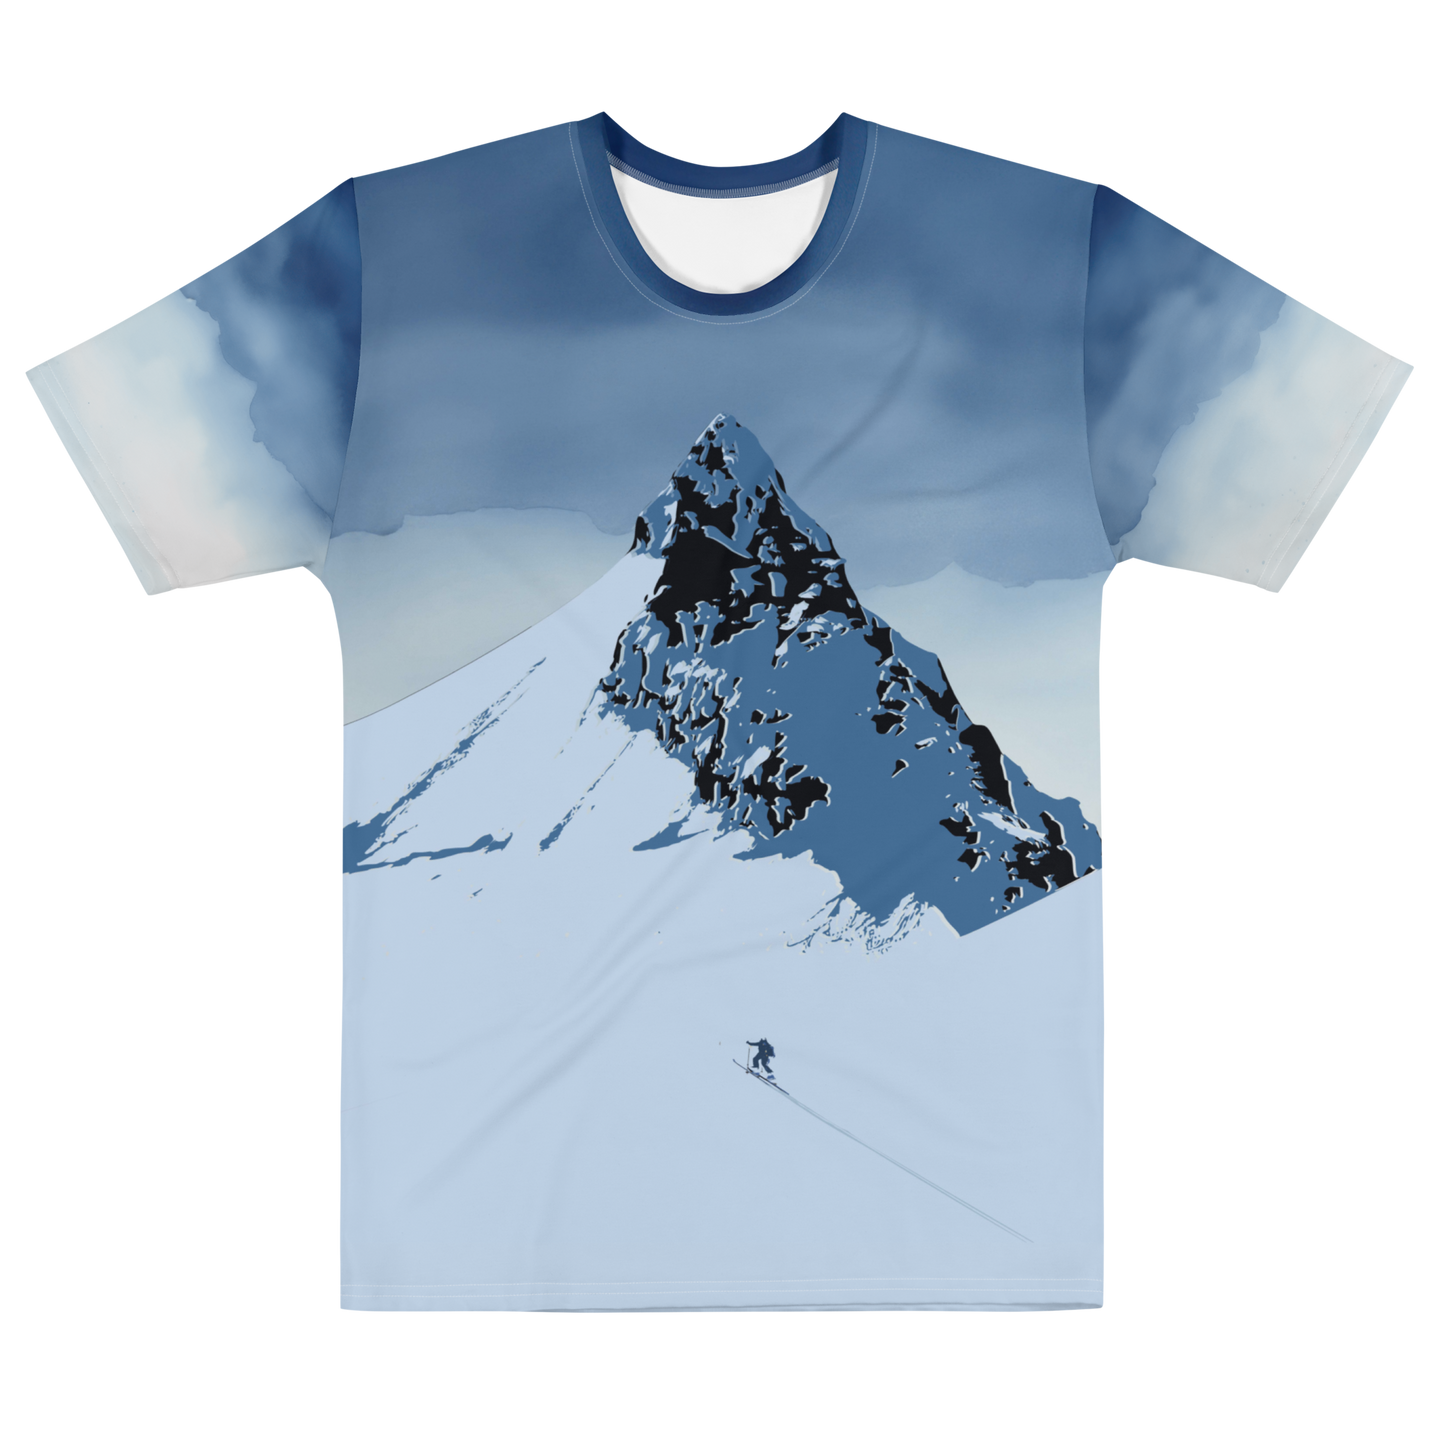 The King Royal tee - t-skjorte - Kolåstinden Alps of Sunnmøre